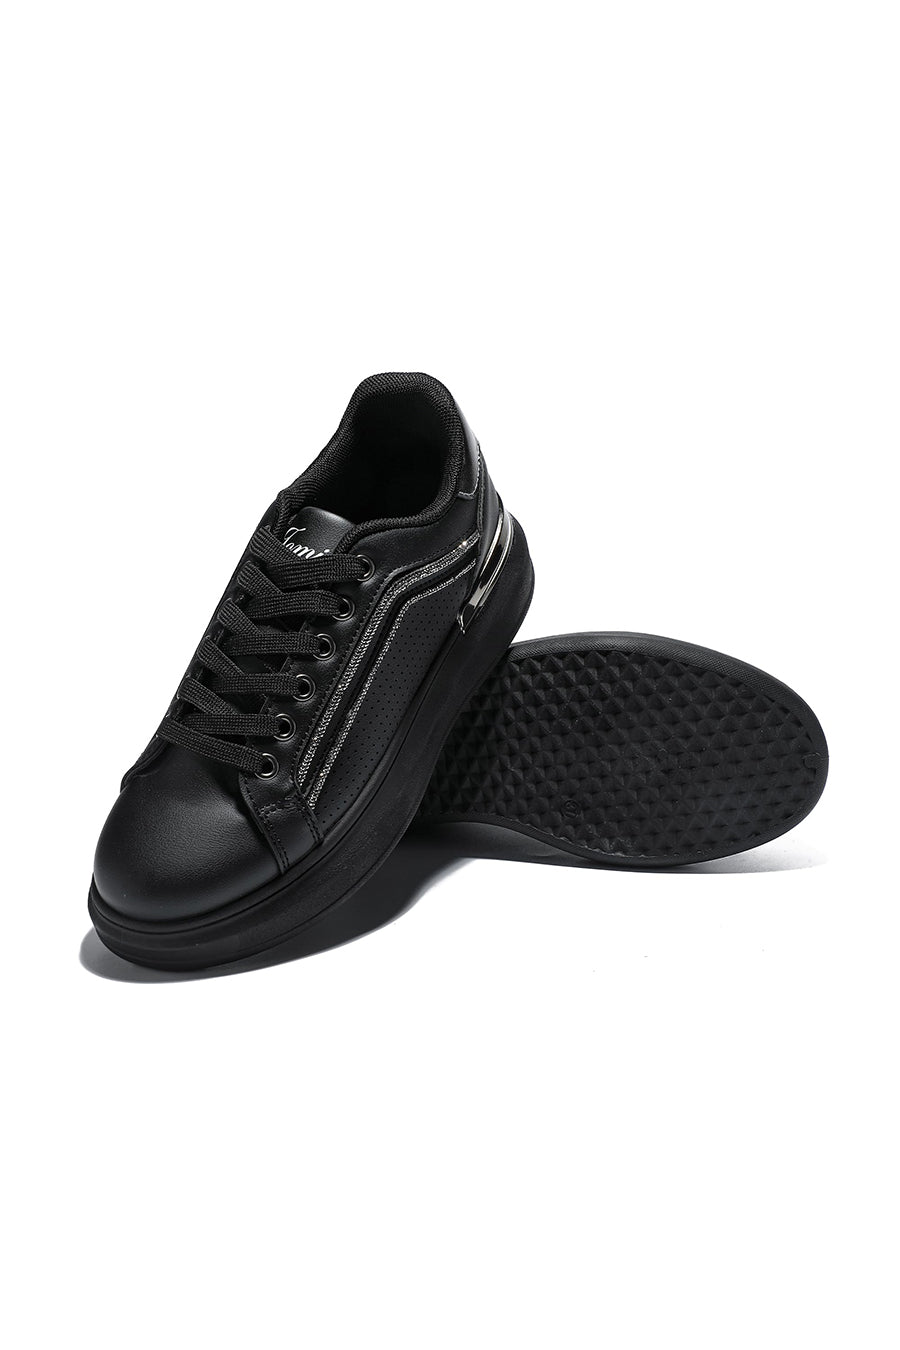 JOMIX Sneakers Donna Casual Scarpe Eleganti SD9381